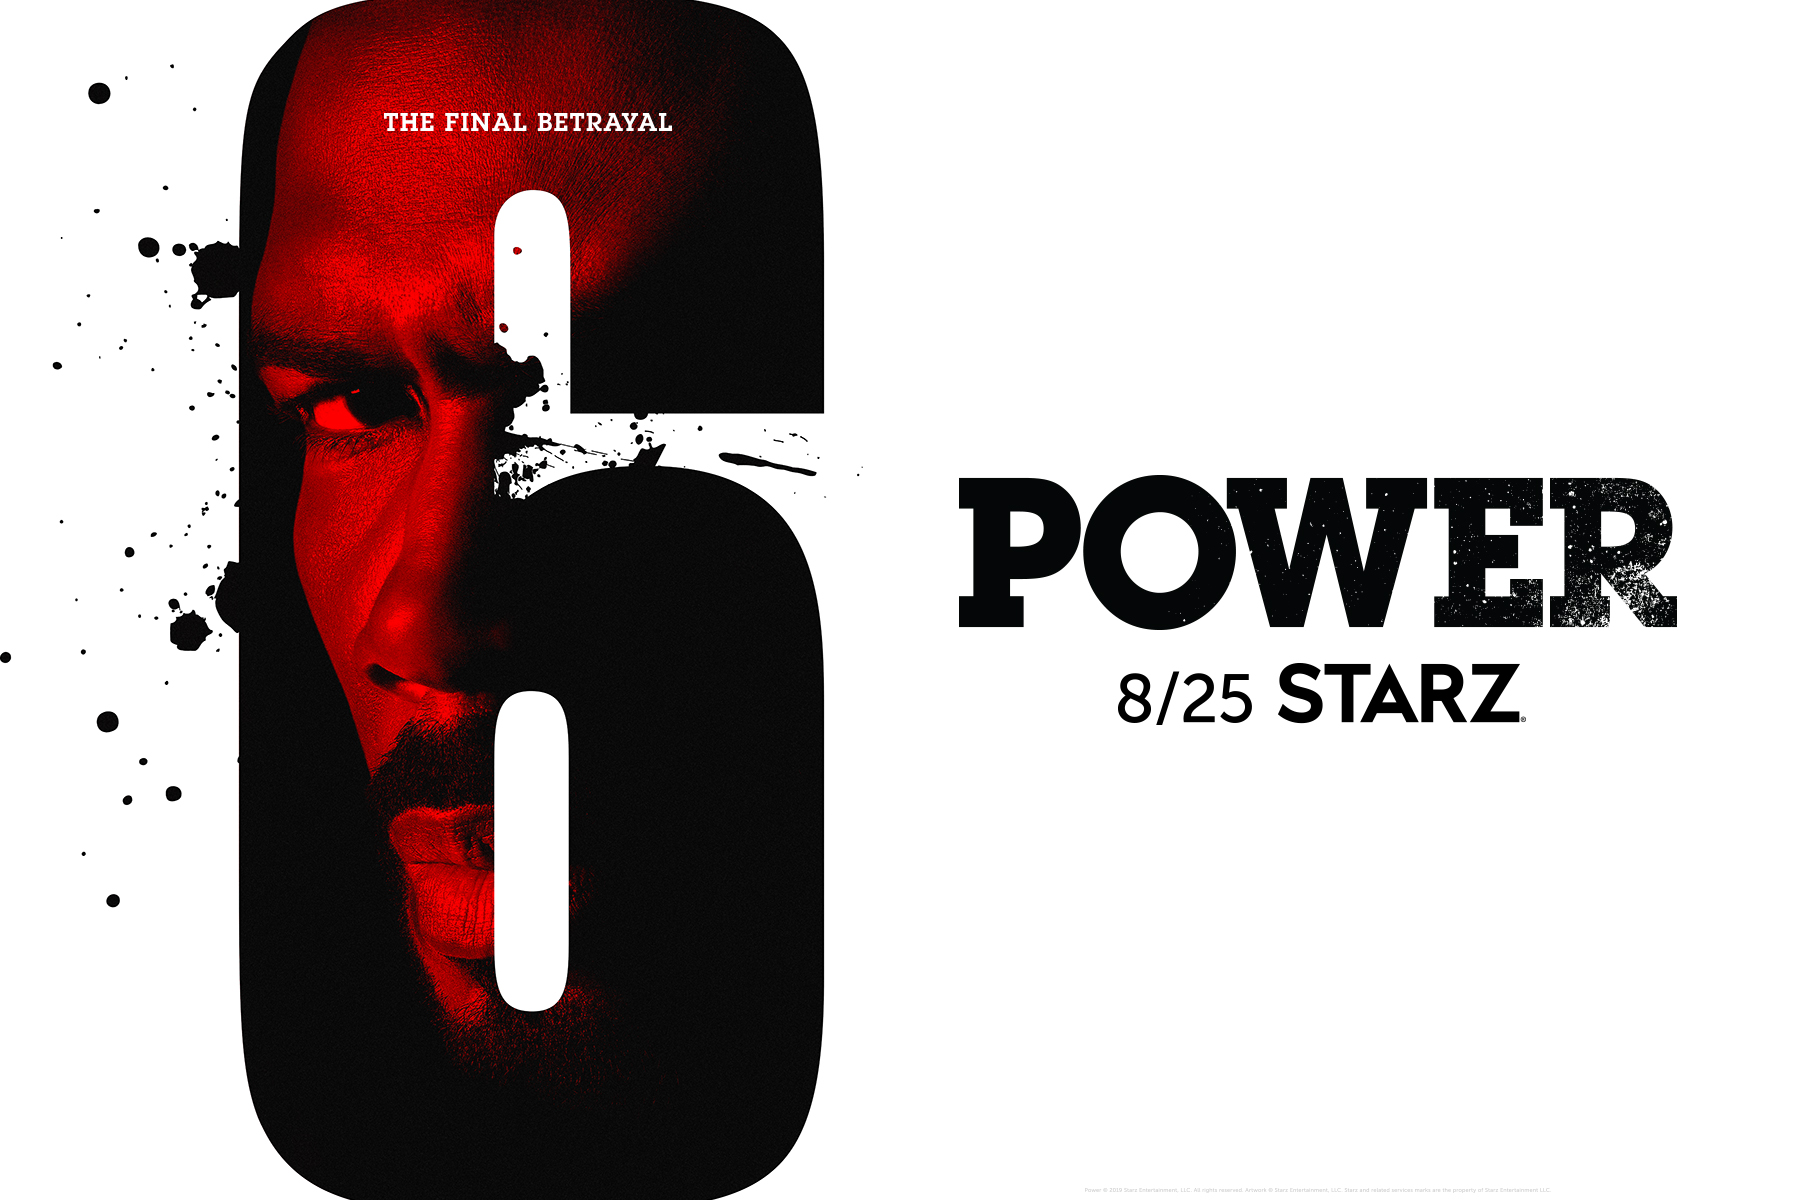 Power season 6 promotional image